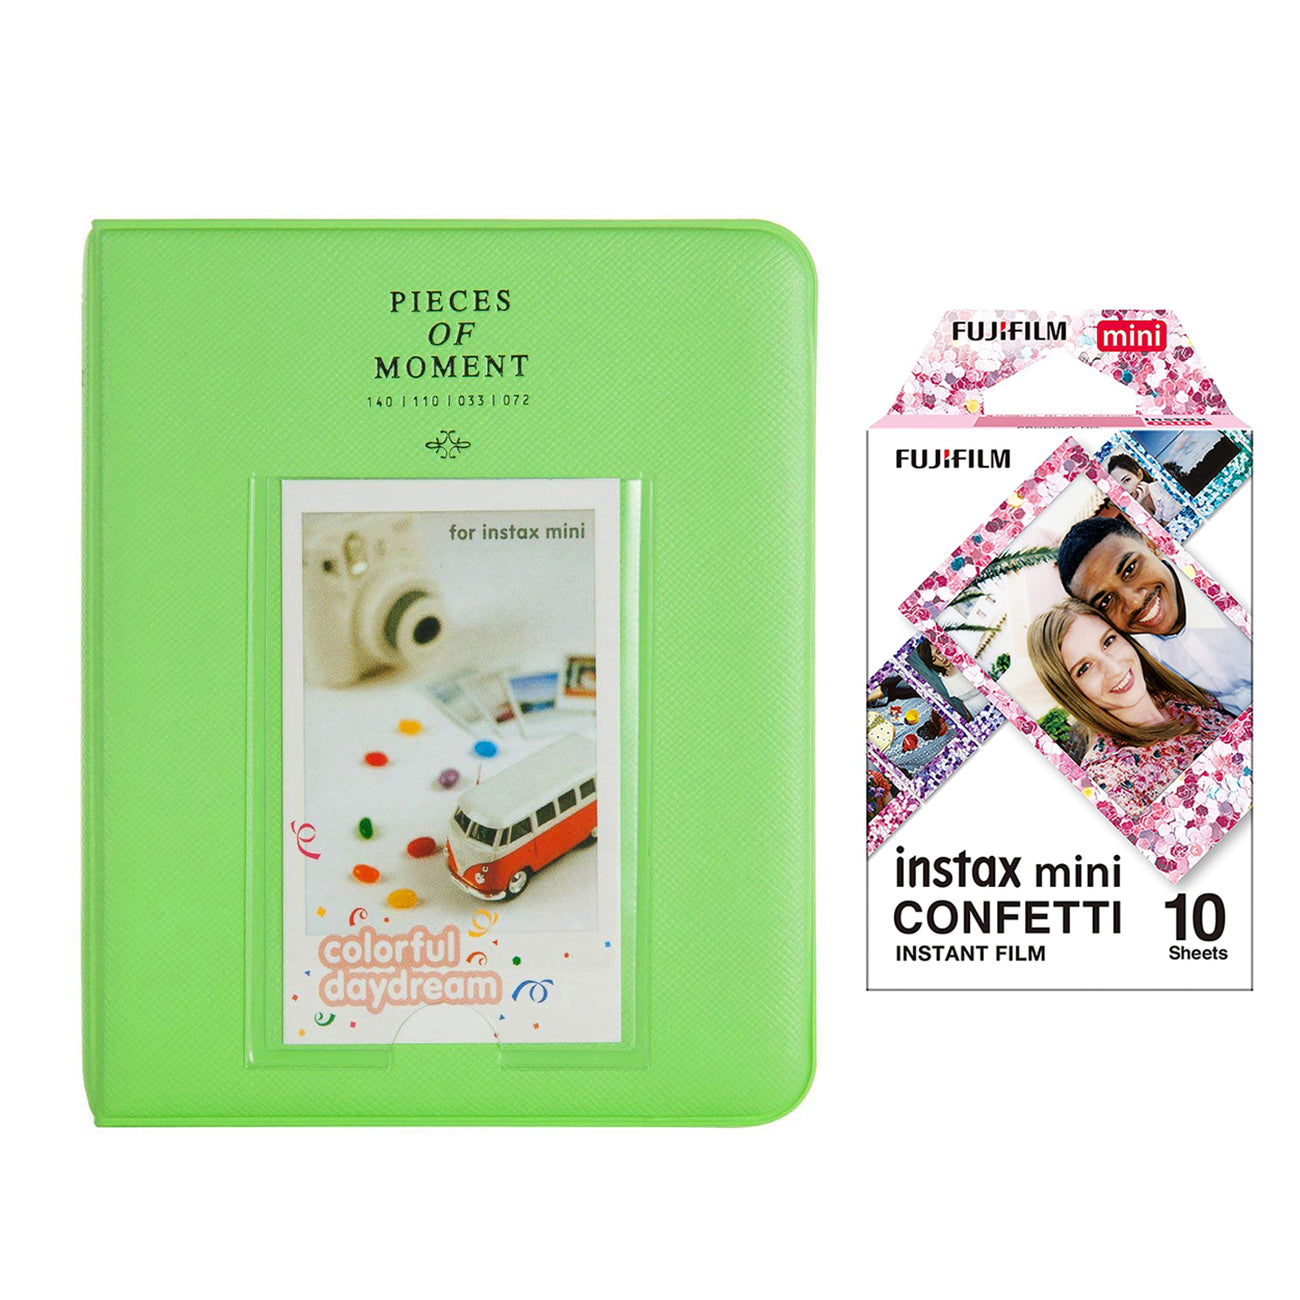 Fujifilm Instax Mini 10X1 confetti Instant Film with Instax Time Photo Album 64 Sheets (LIME GREEN)